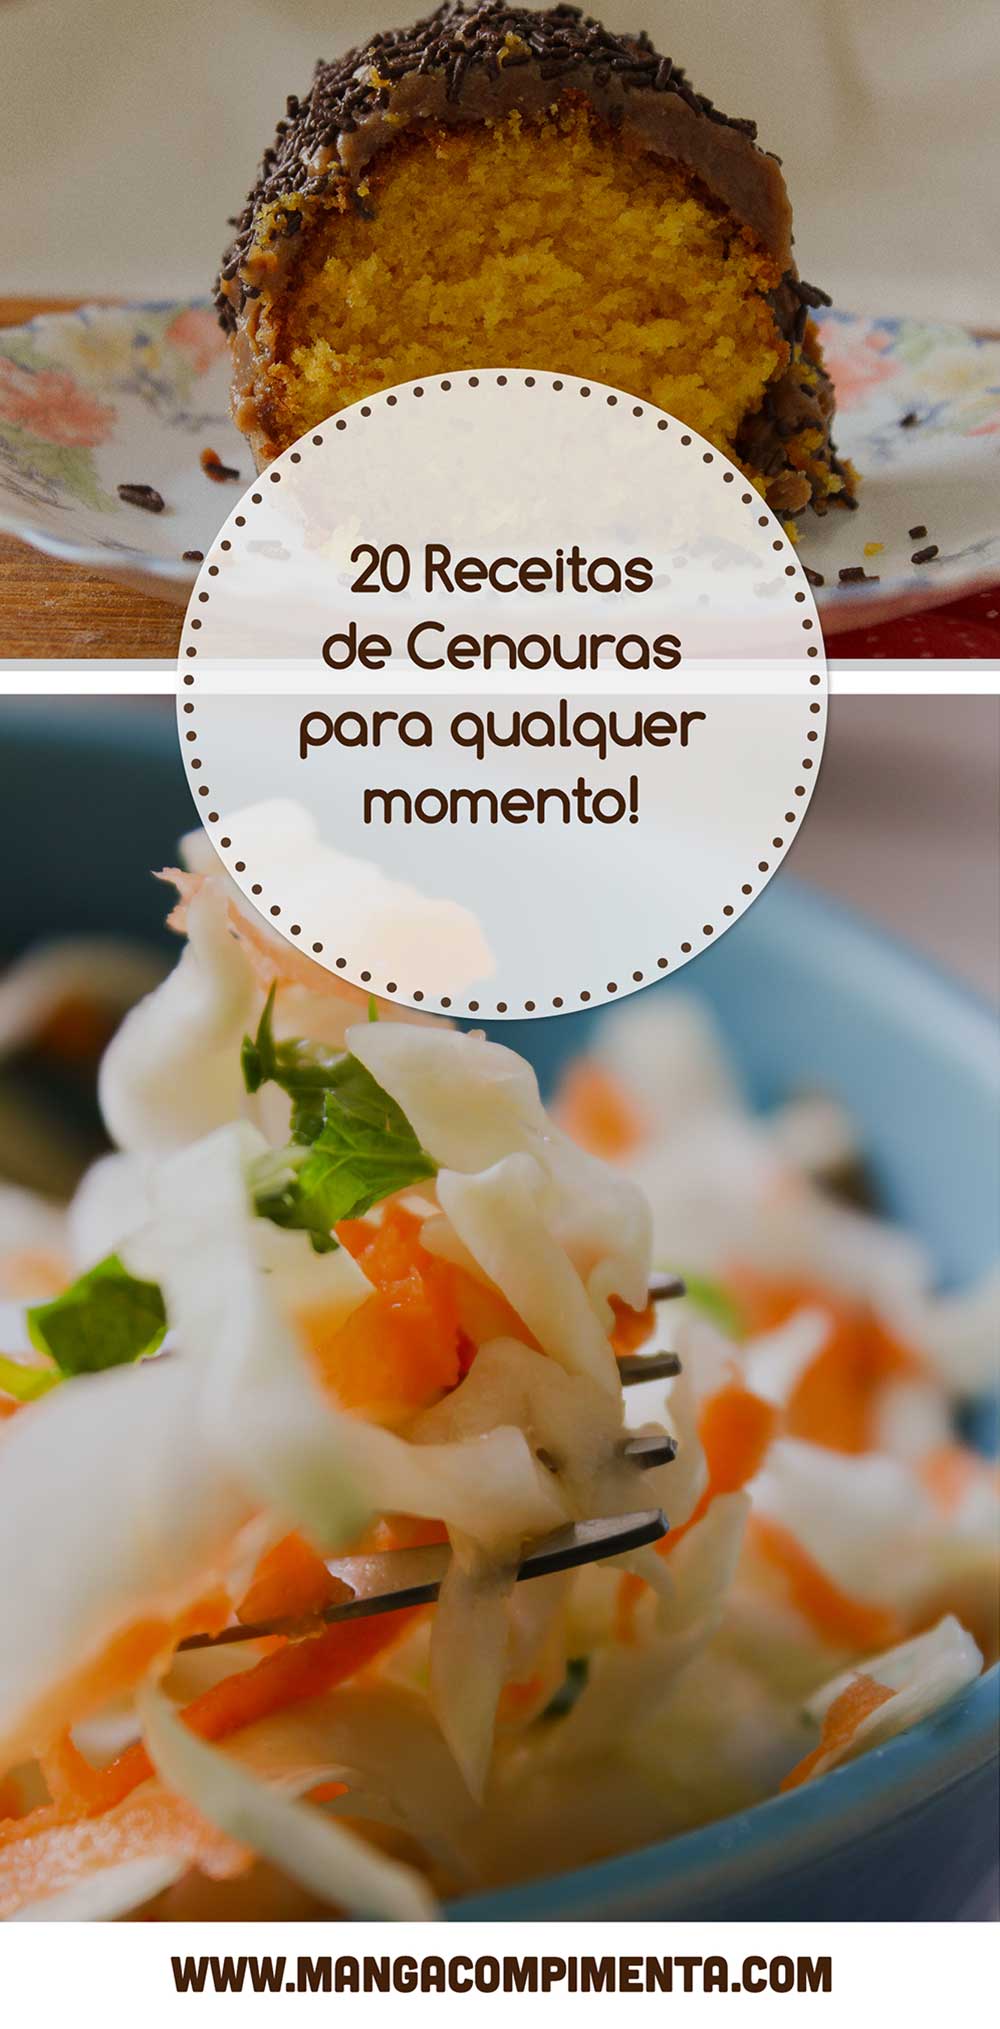 Confira as 20 Receitas de Cenouras para qualquer momento aí na sua casa!